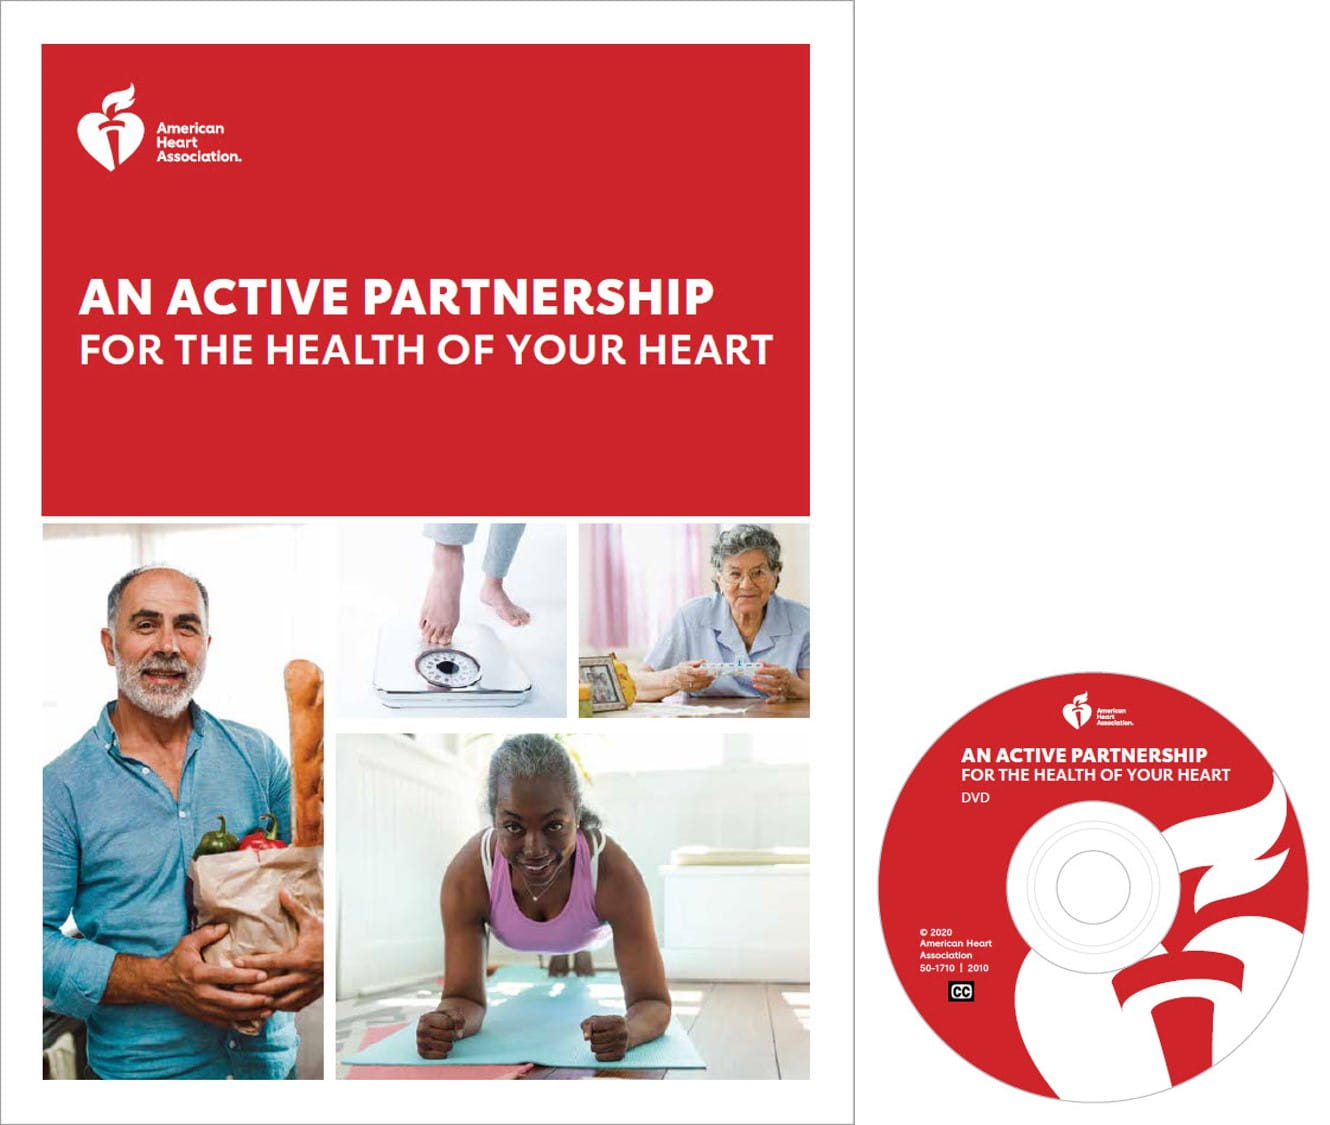 https://www.heart.org/-/media/Images/Health-Topics/Consumer-Healthcare/Brochures/Active-Partnership-product-photo.jpg